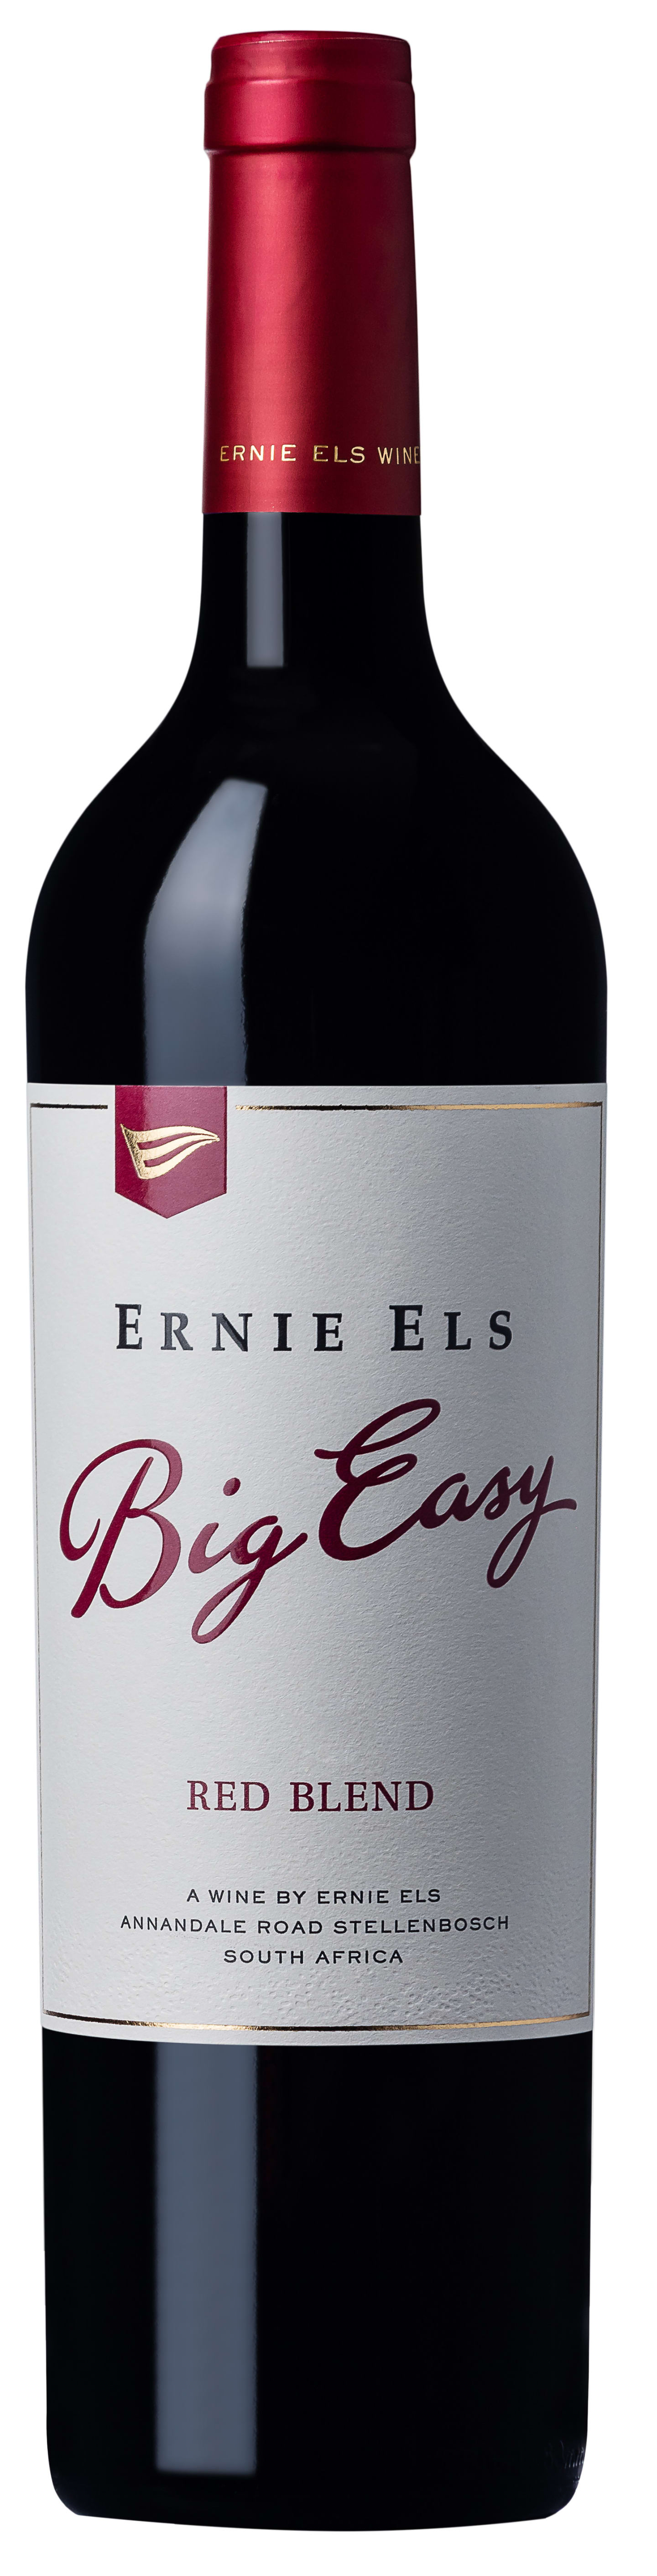 Ernie Els Big Easy Red Blend 2017